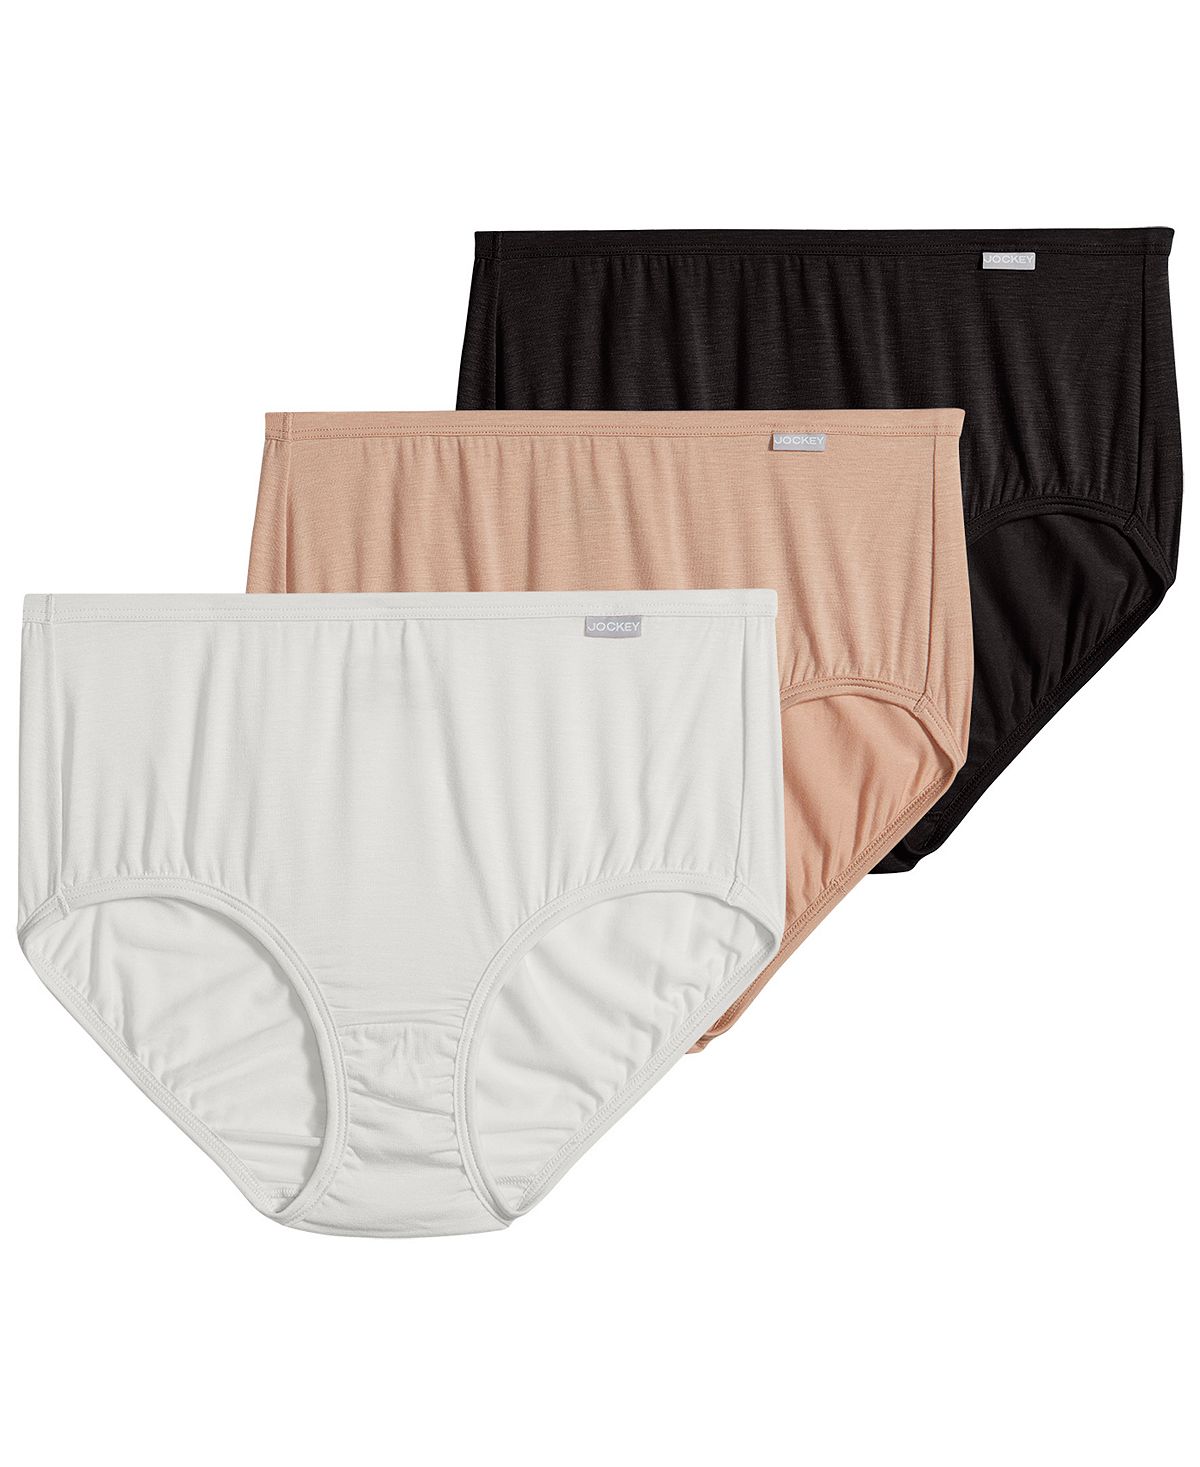 комплект нижнего белья elance hipster underwear 3 pack 1482 1488 также доступен в размерах plus jockey Комплект хлопкового нижнего белья Elance Supersoft, 3 шт. 2073 Jockey